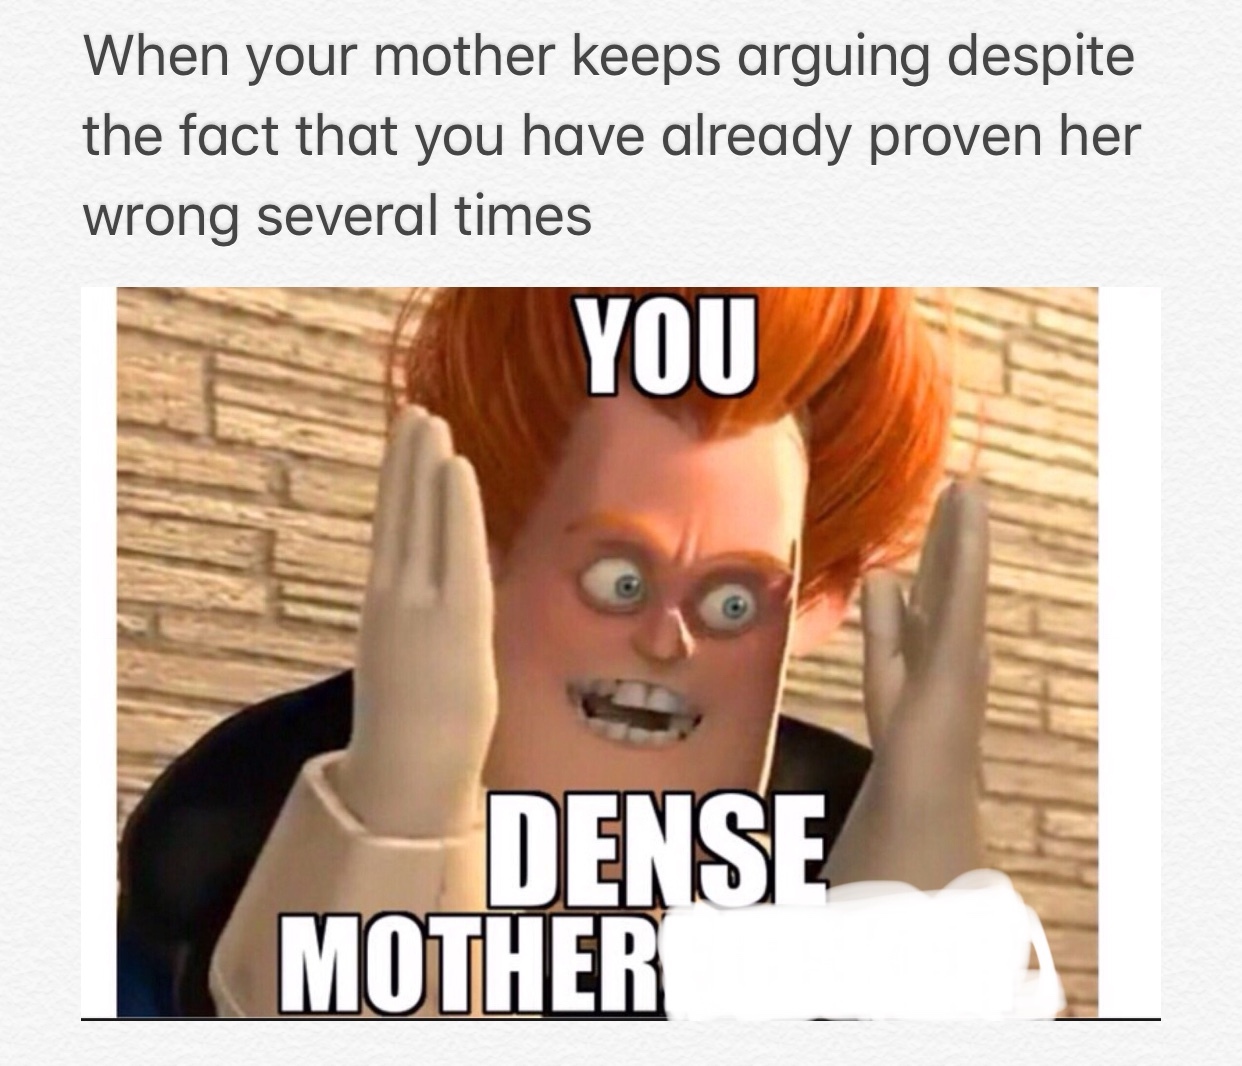 Respect mothers - meme